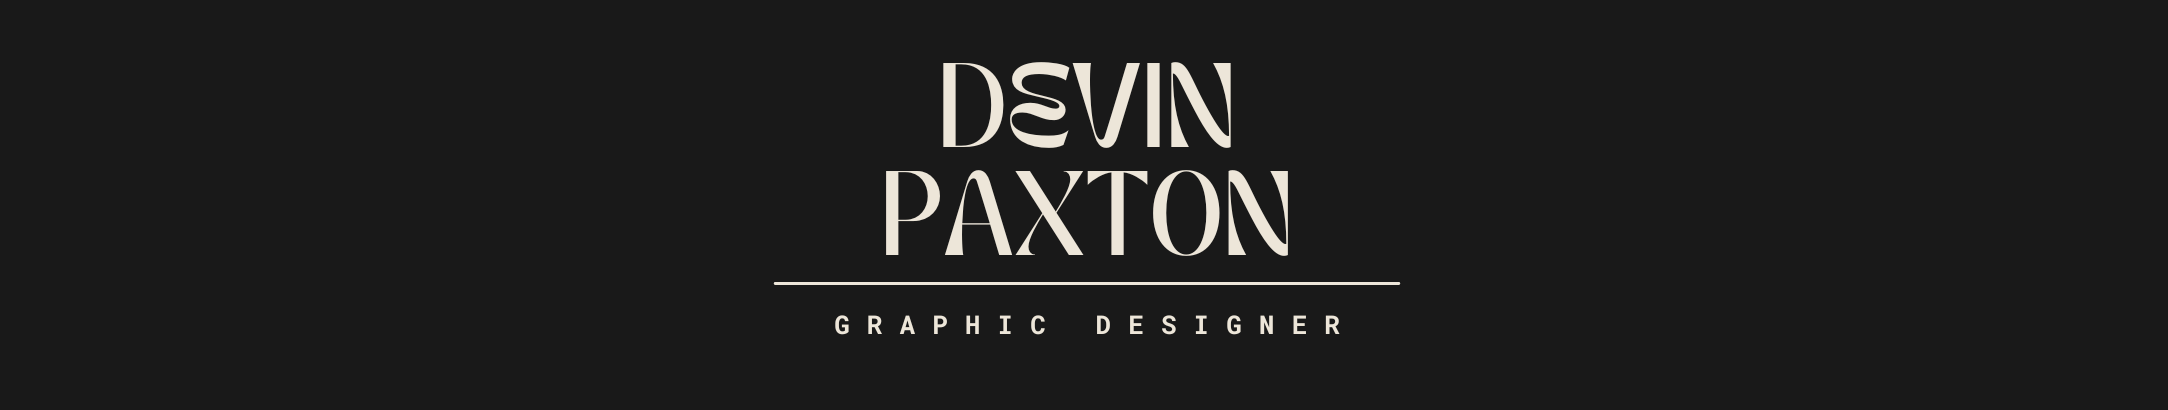 Devin Paxton's profile banner